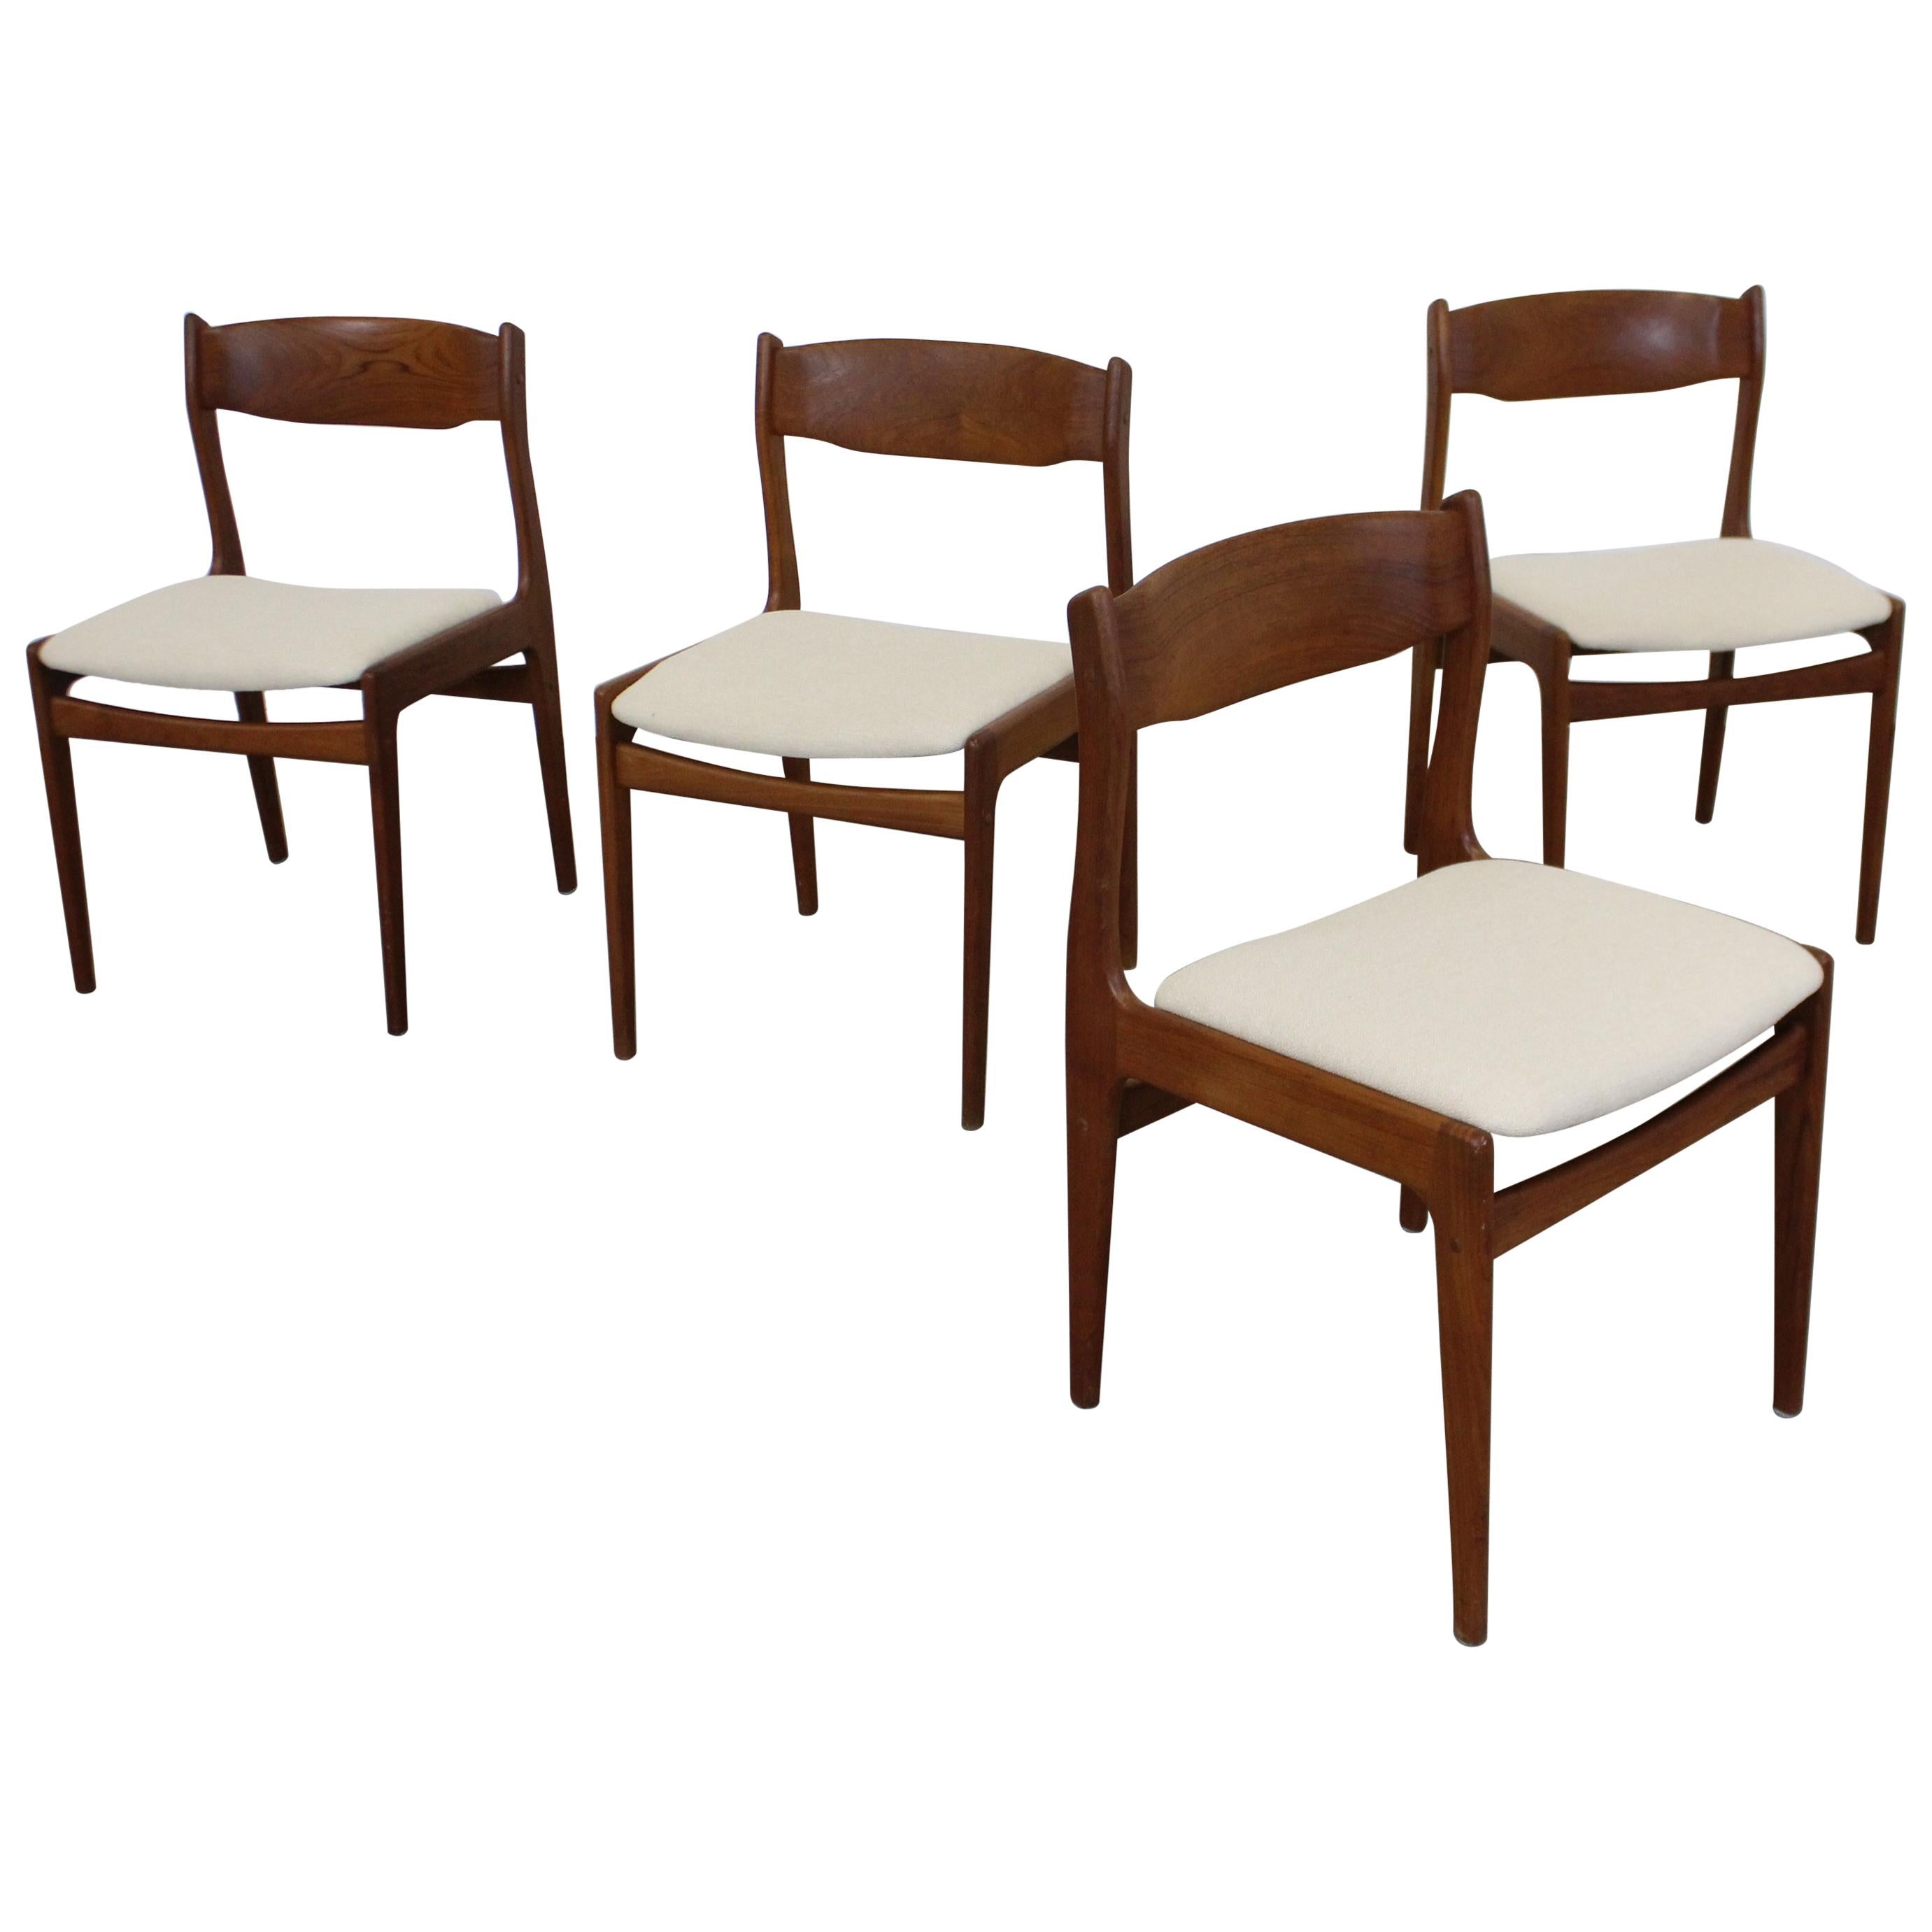 Set of 4 Midcentury Danish Modern Teak Side Dining Chairs with Teak Backs